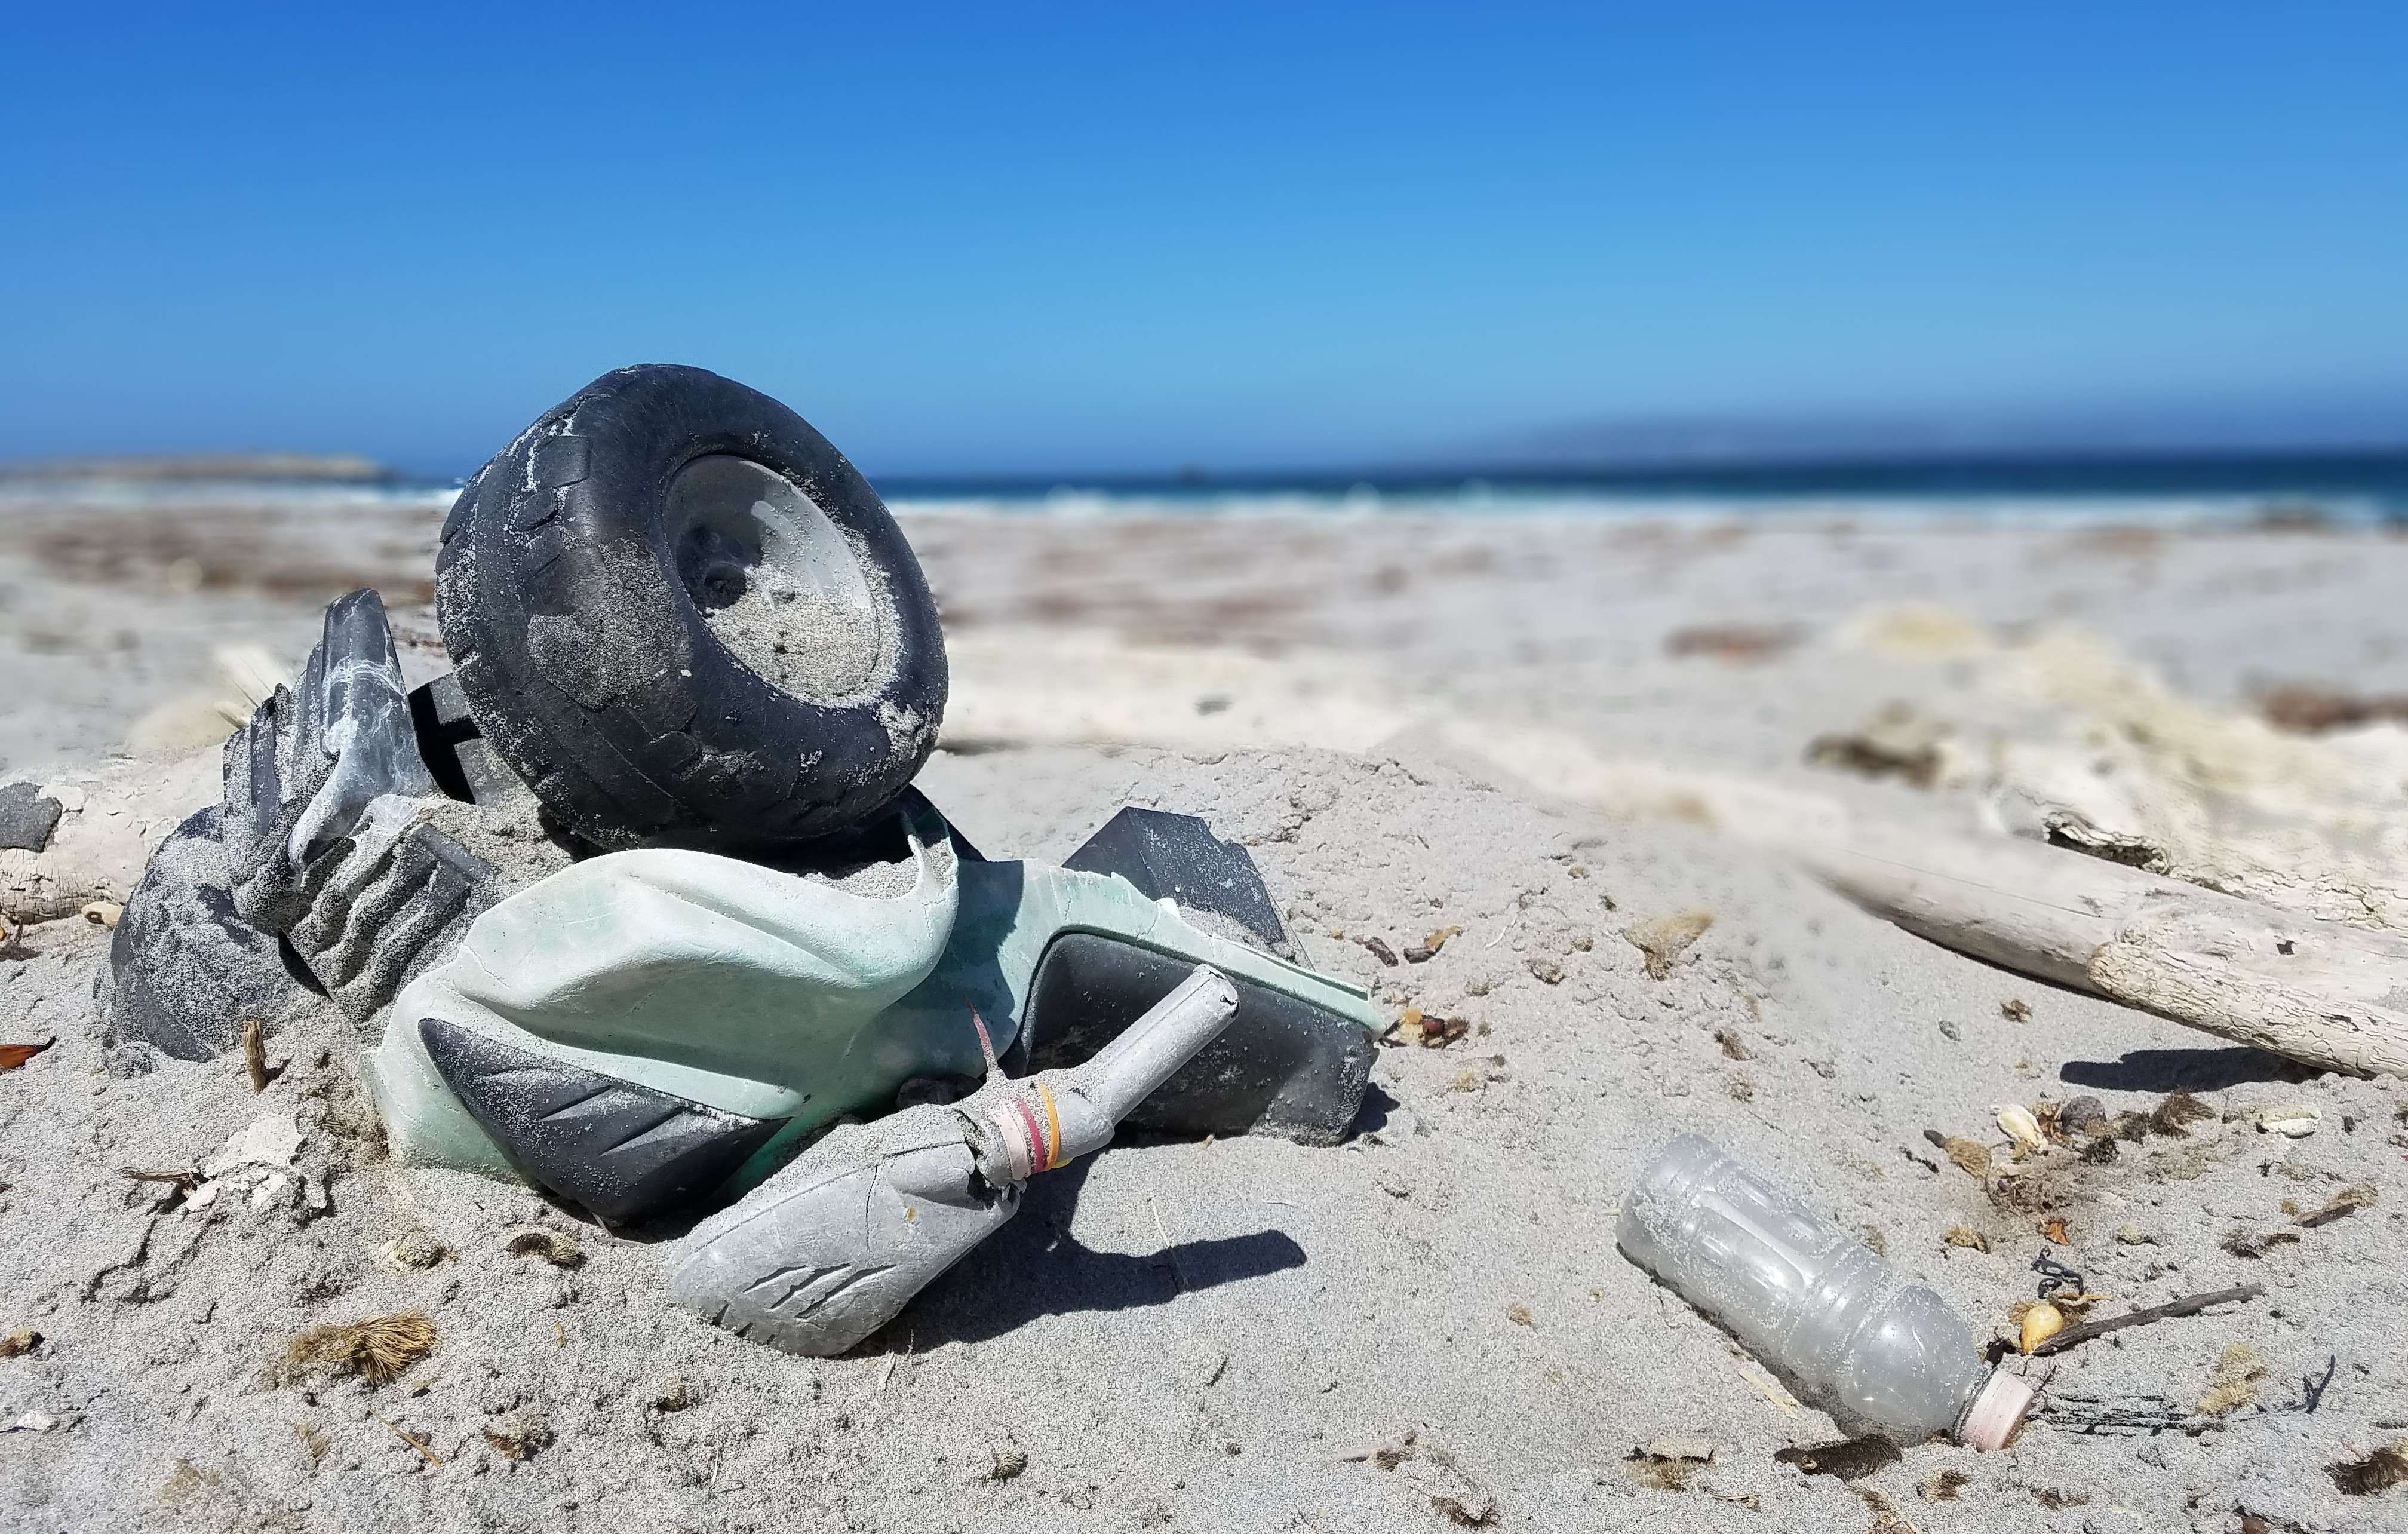 Plastic on the beach.